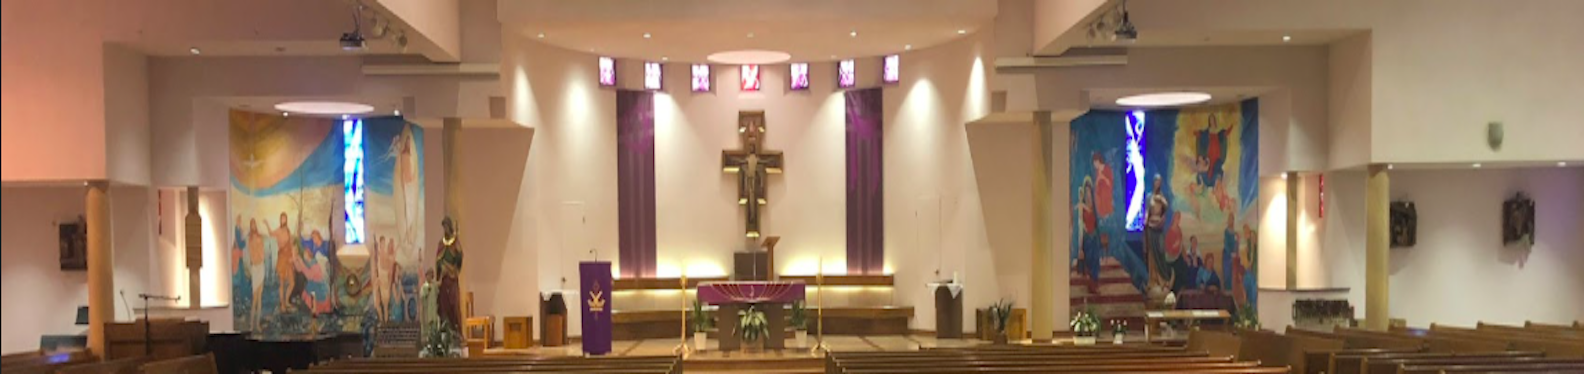 Immaculate Conception Parish Woodbridge Alter